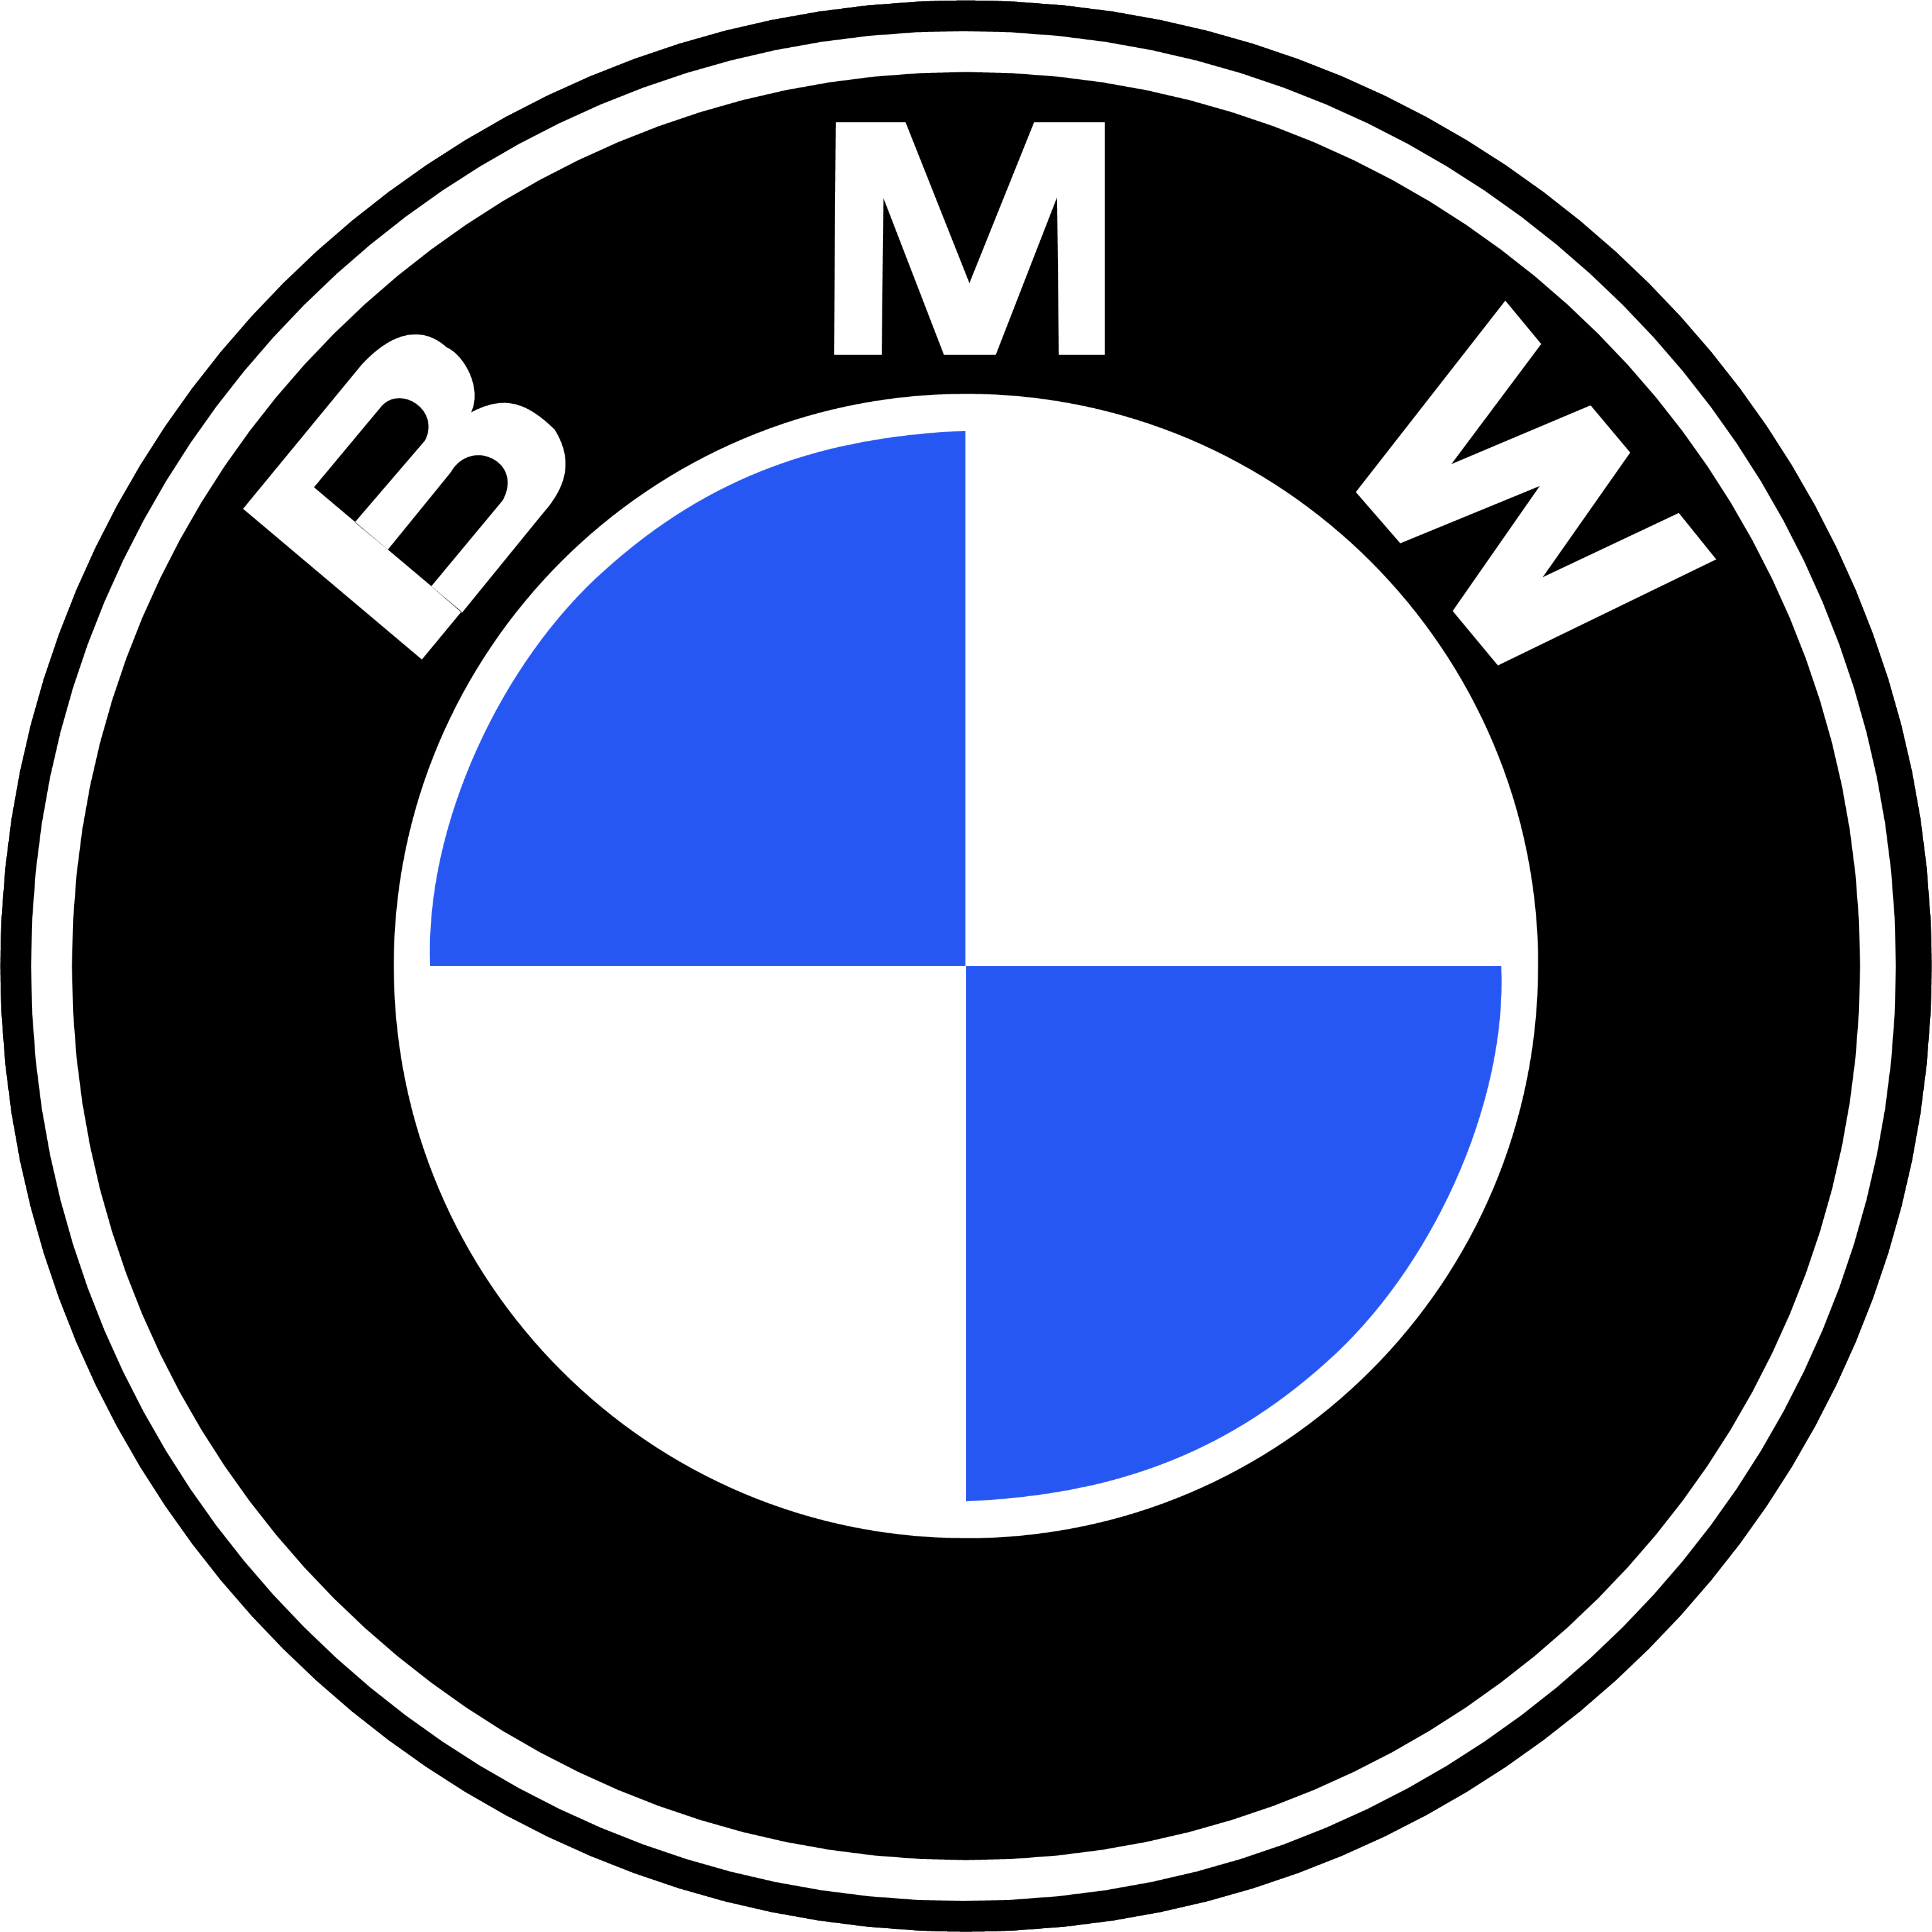 Subsidiary of BMW Logo - bmw logo hd | ololoshenka | Pinterest | Bmw logo, Cars and Logos